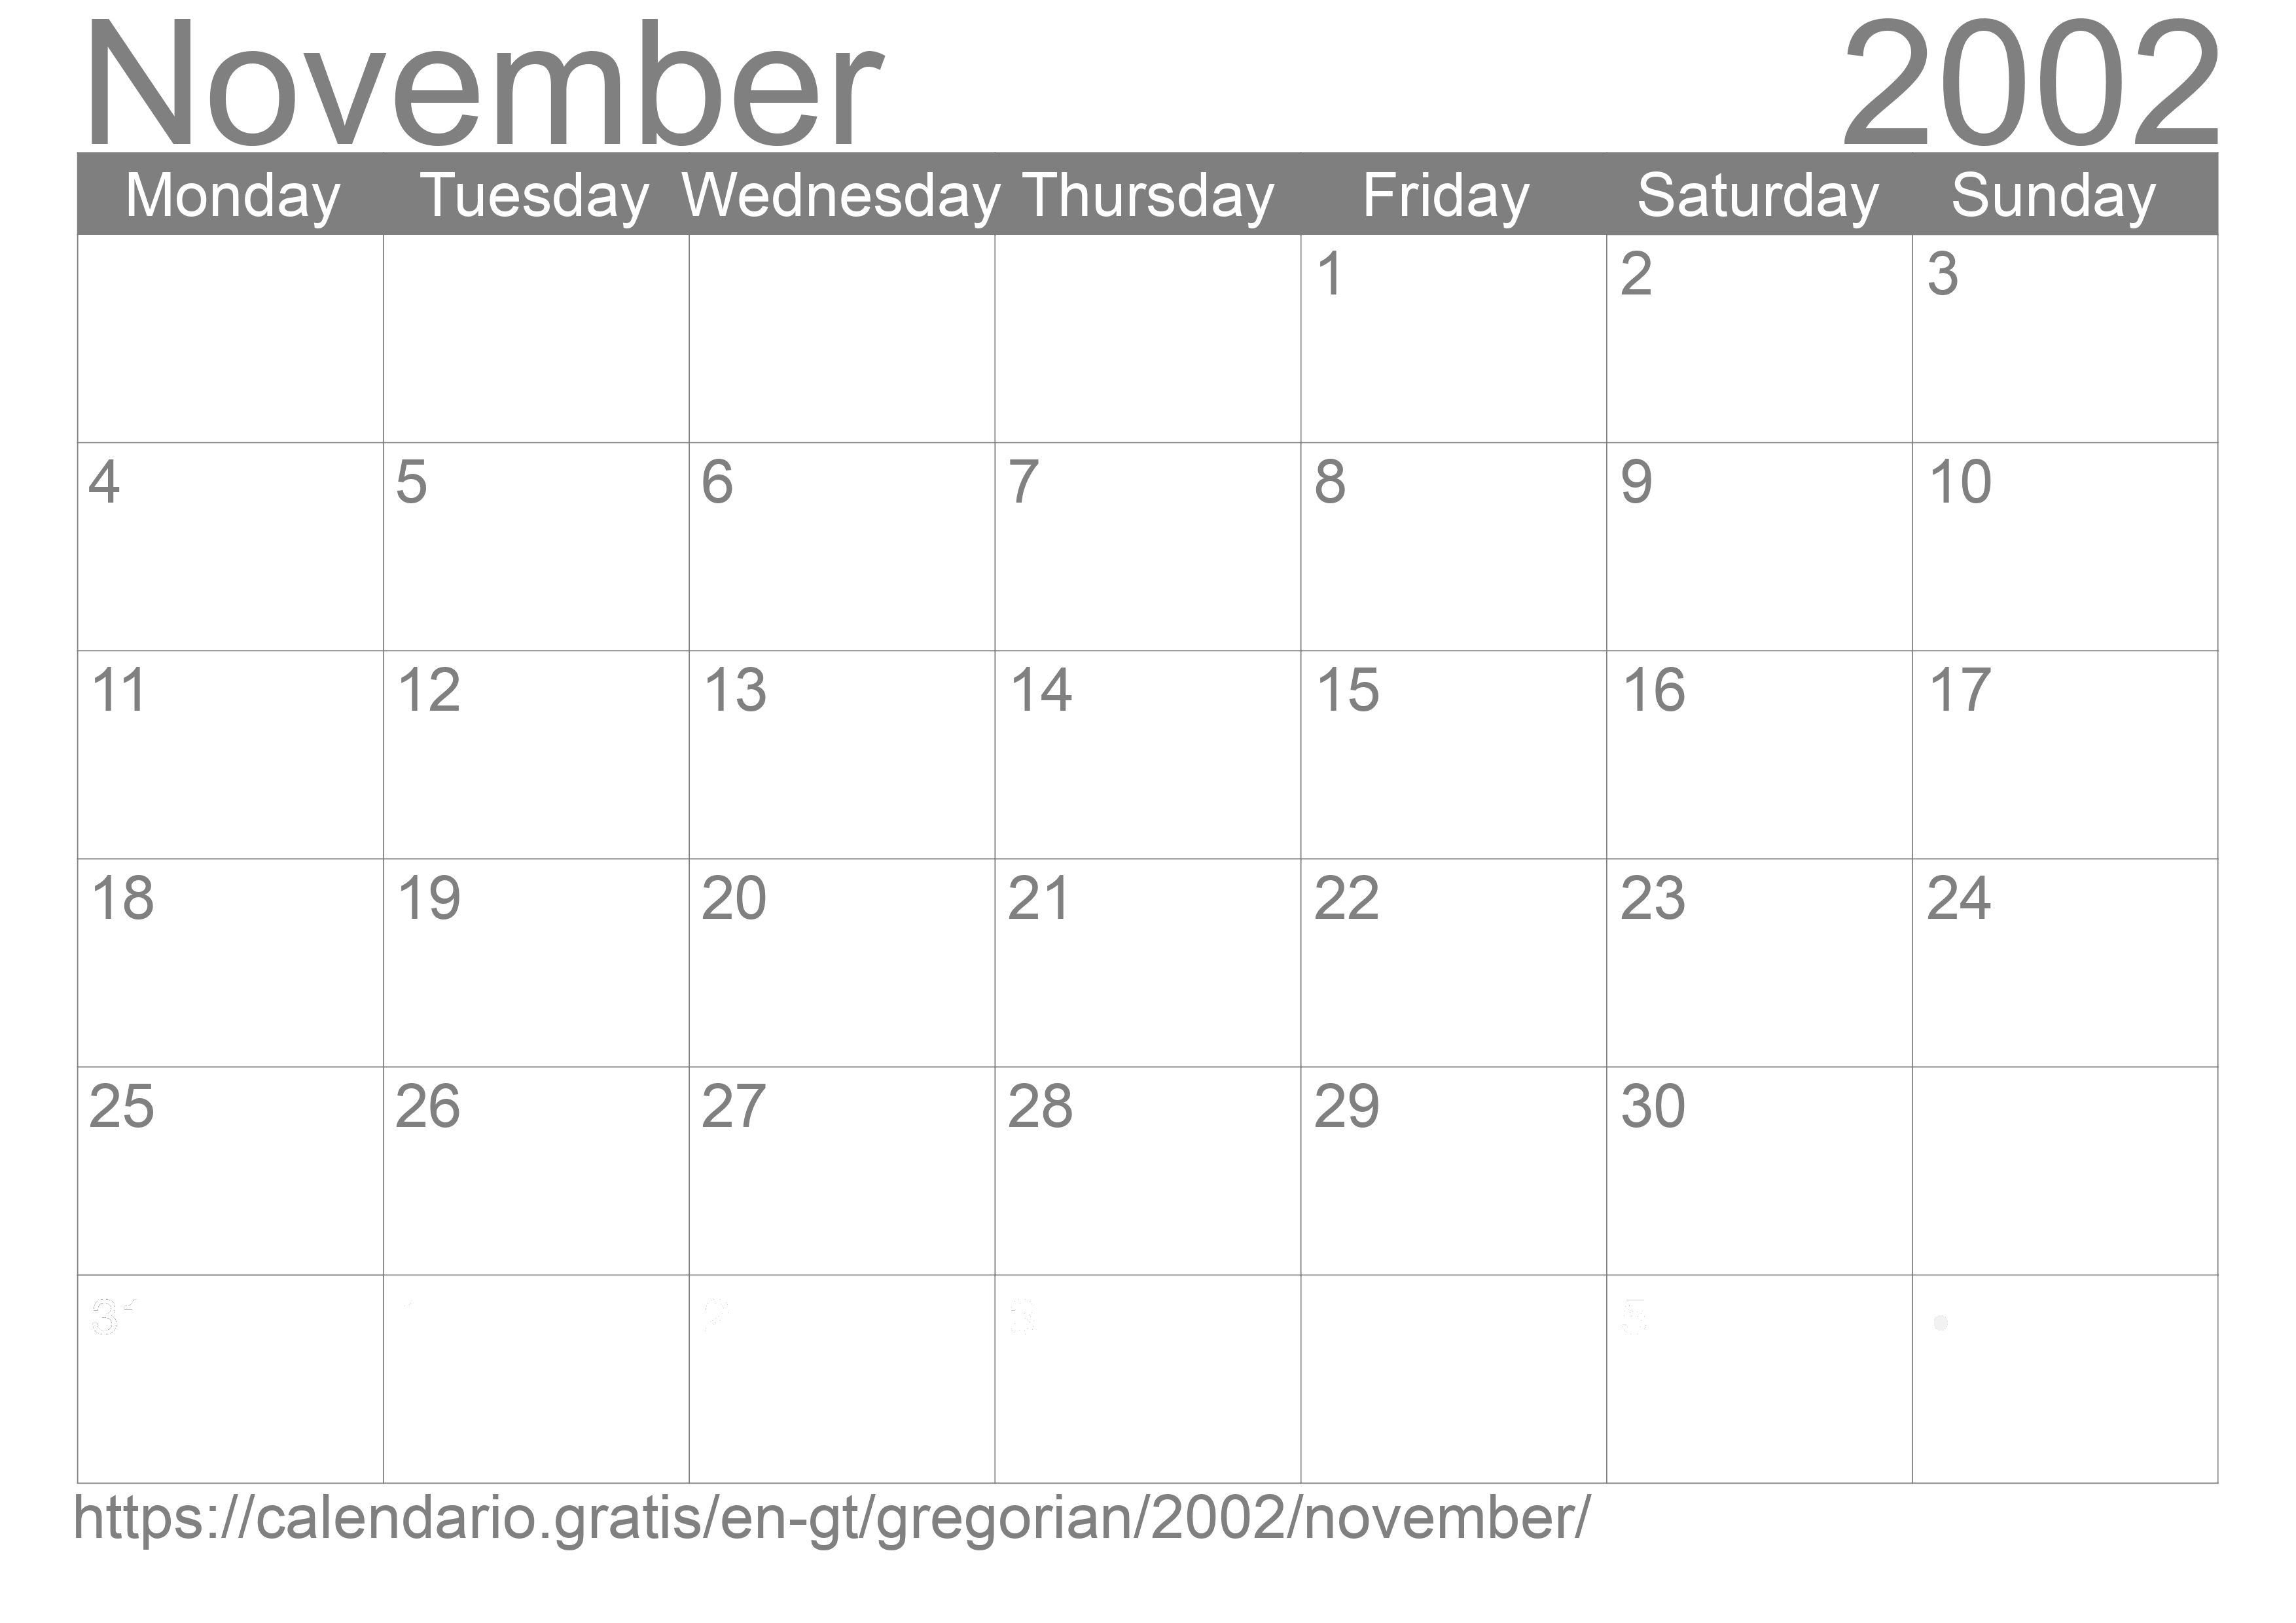 Calendar November 2002 to print